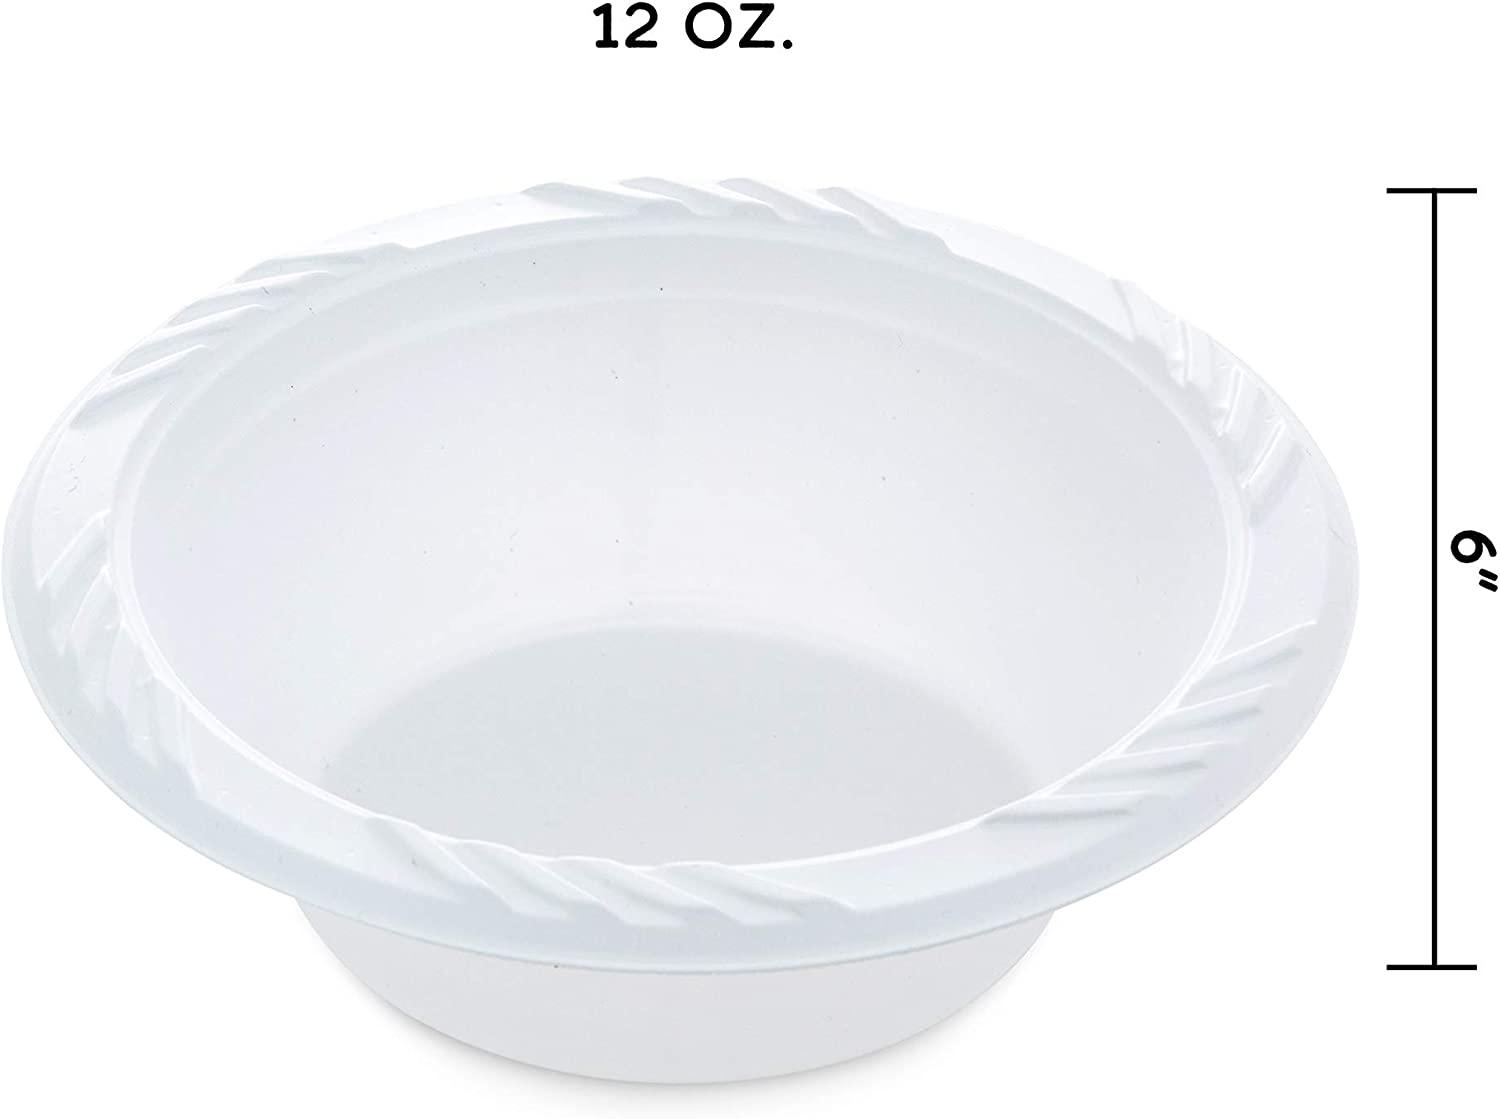 Genuine Joe ReusableDisposable 12 Oz. Plastic Bowls White Pack Of